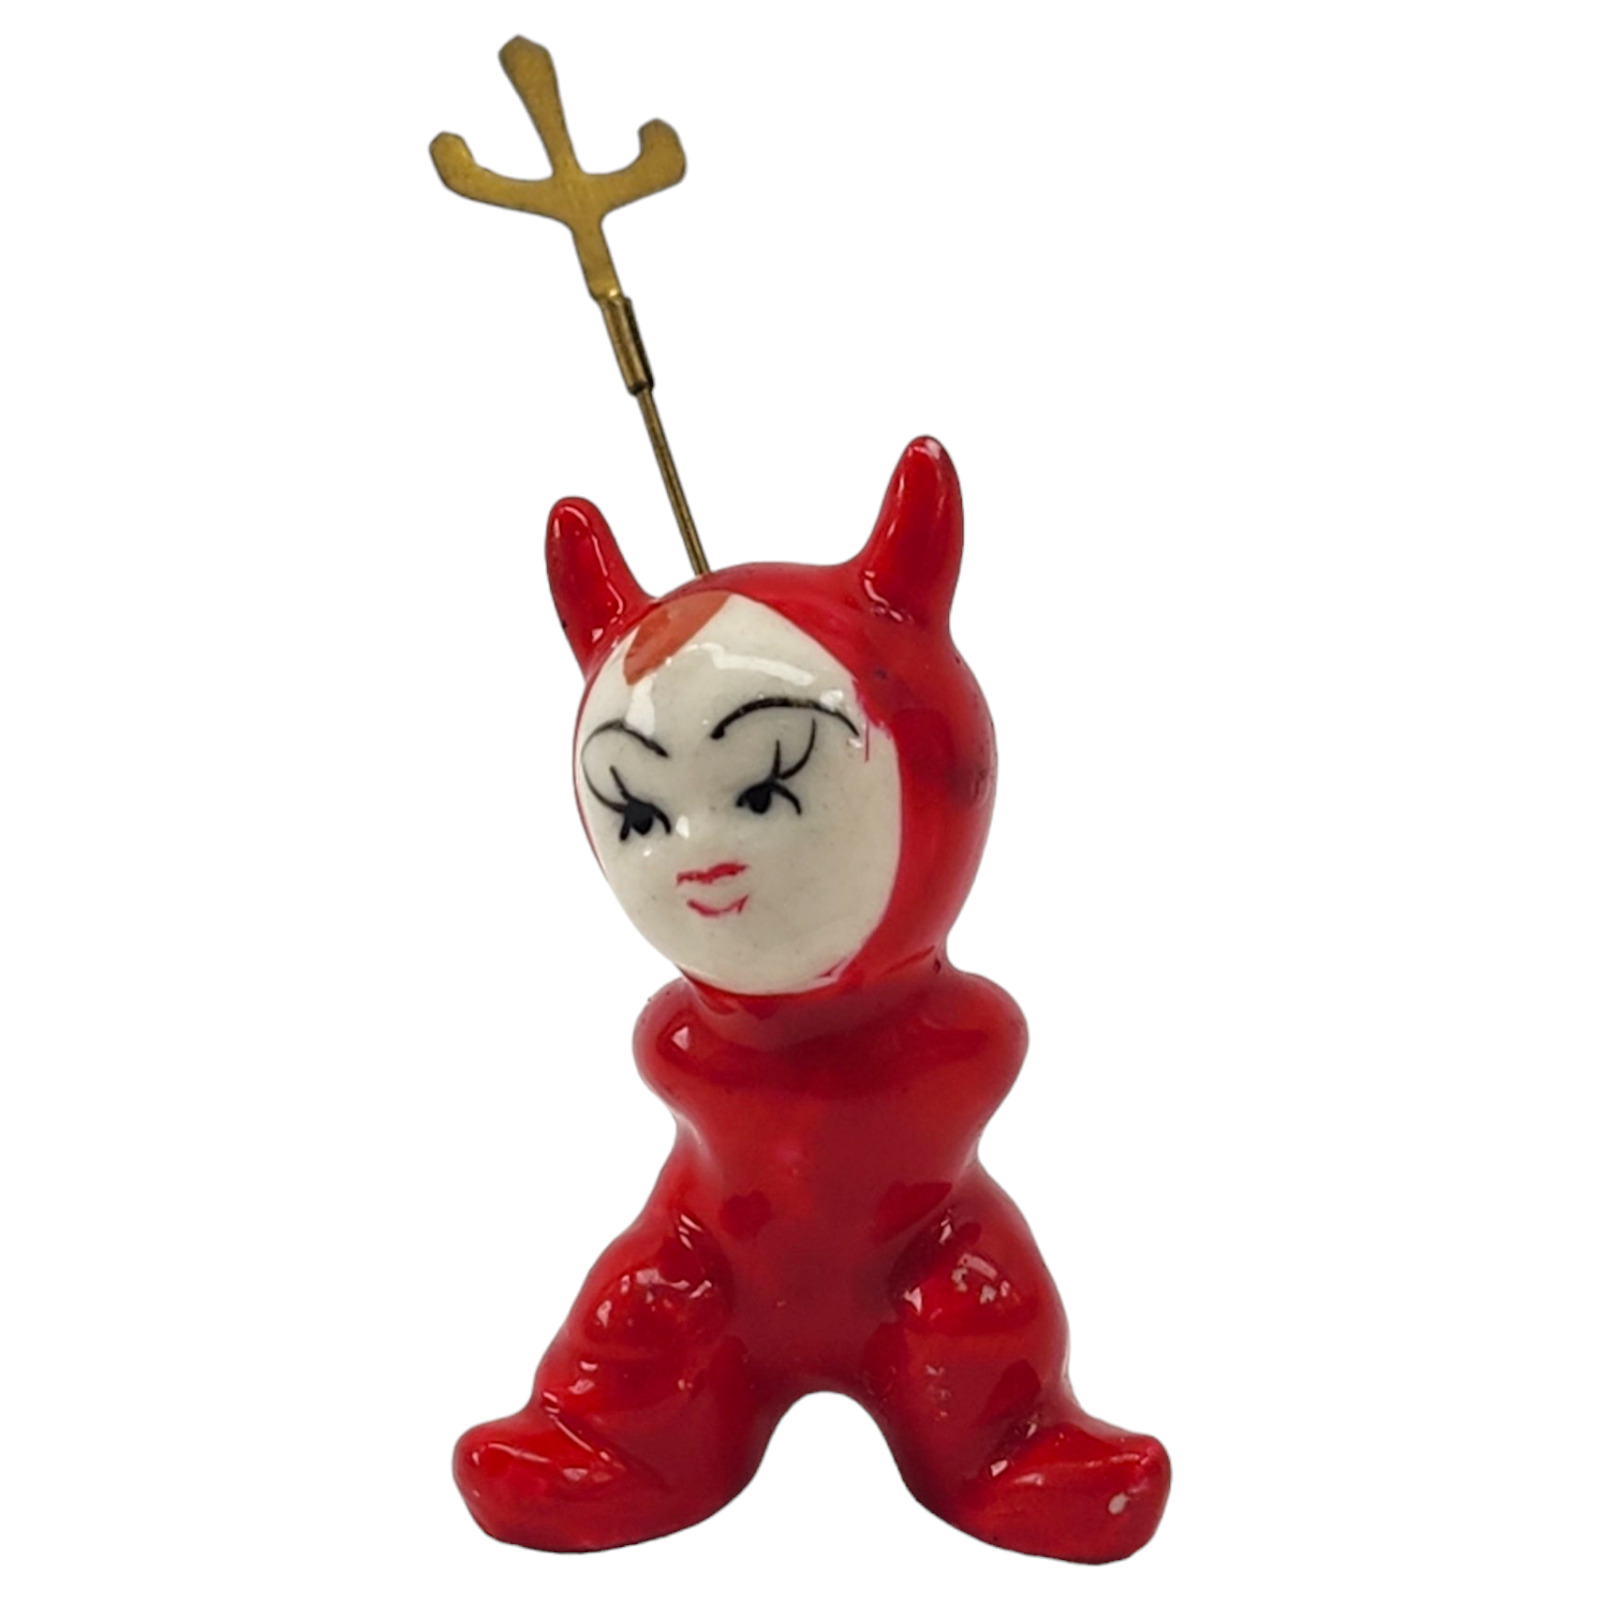 Vintage Pixie Elf Red Devil Baby Miniature Figurine Ceramic Mid Century